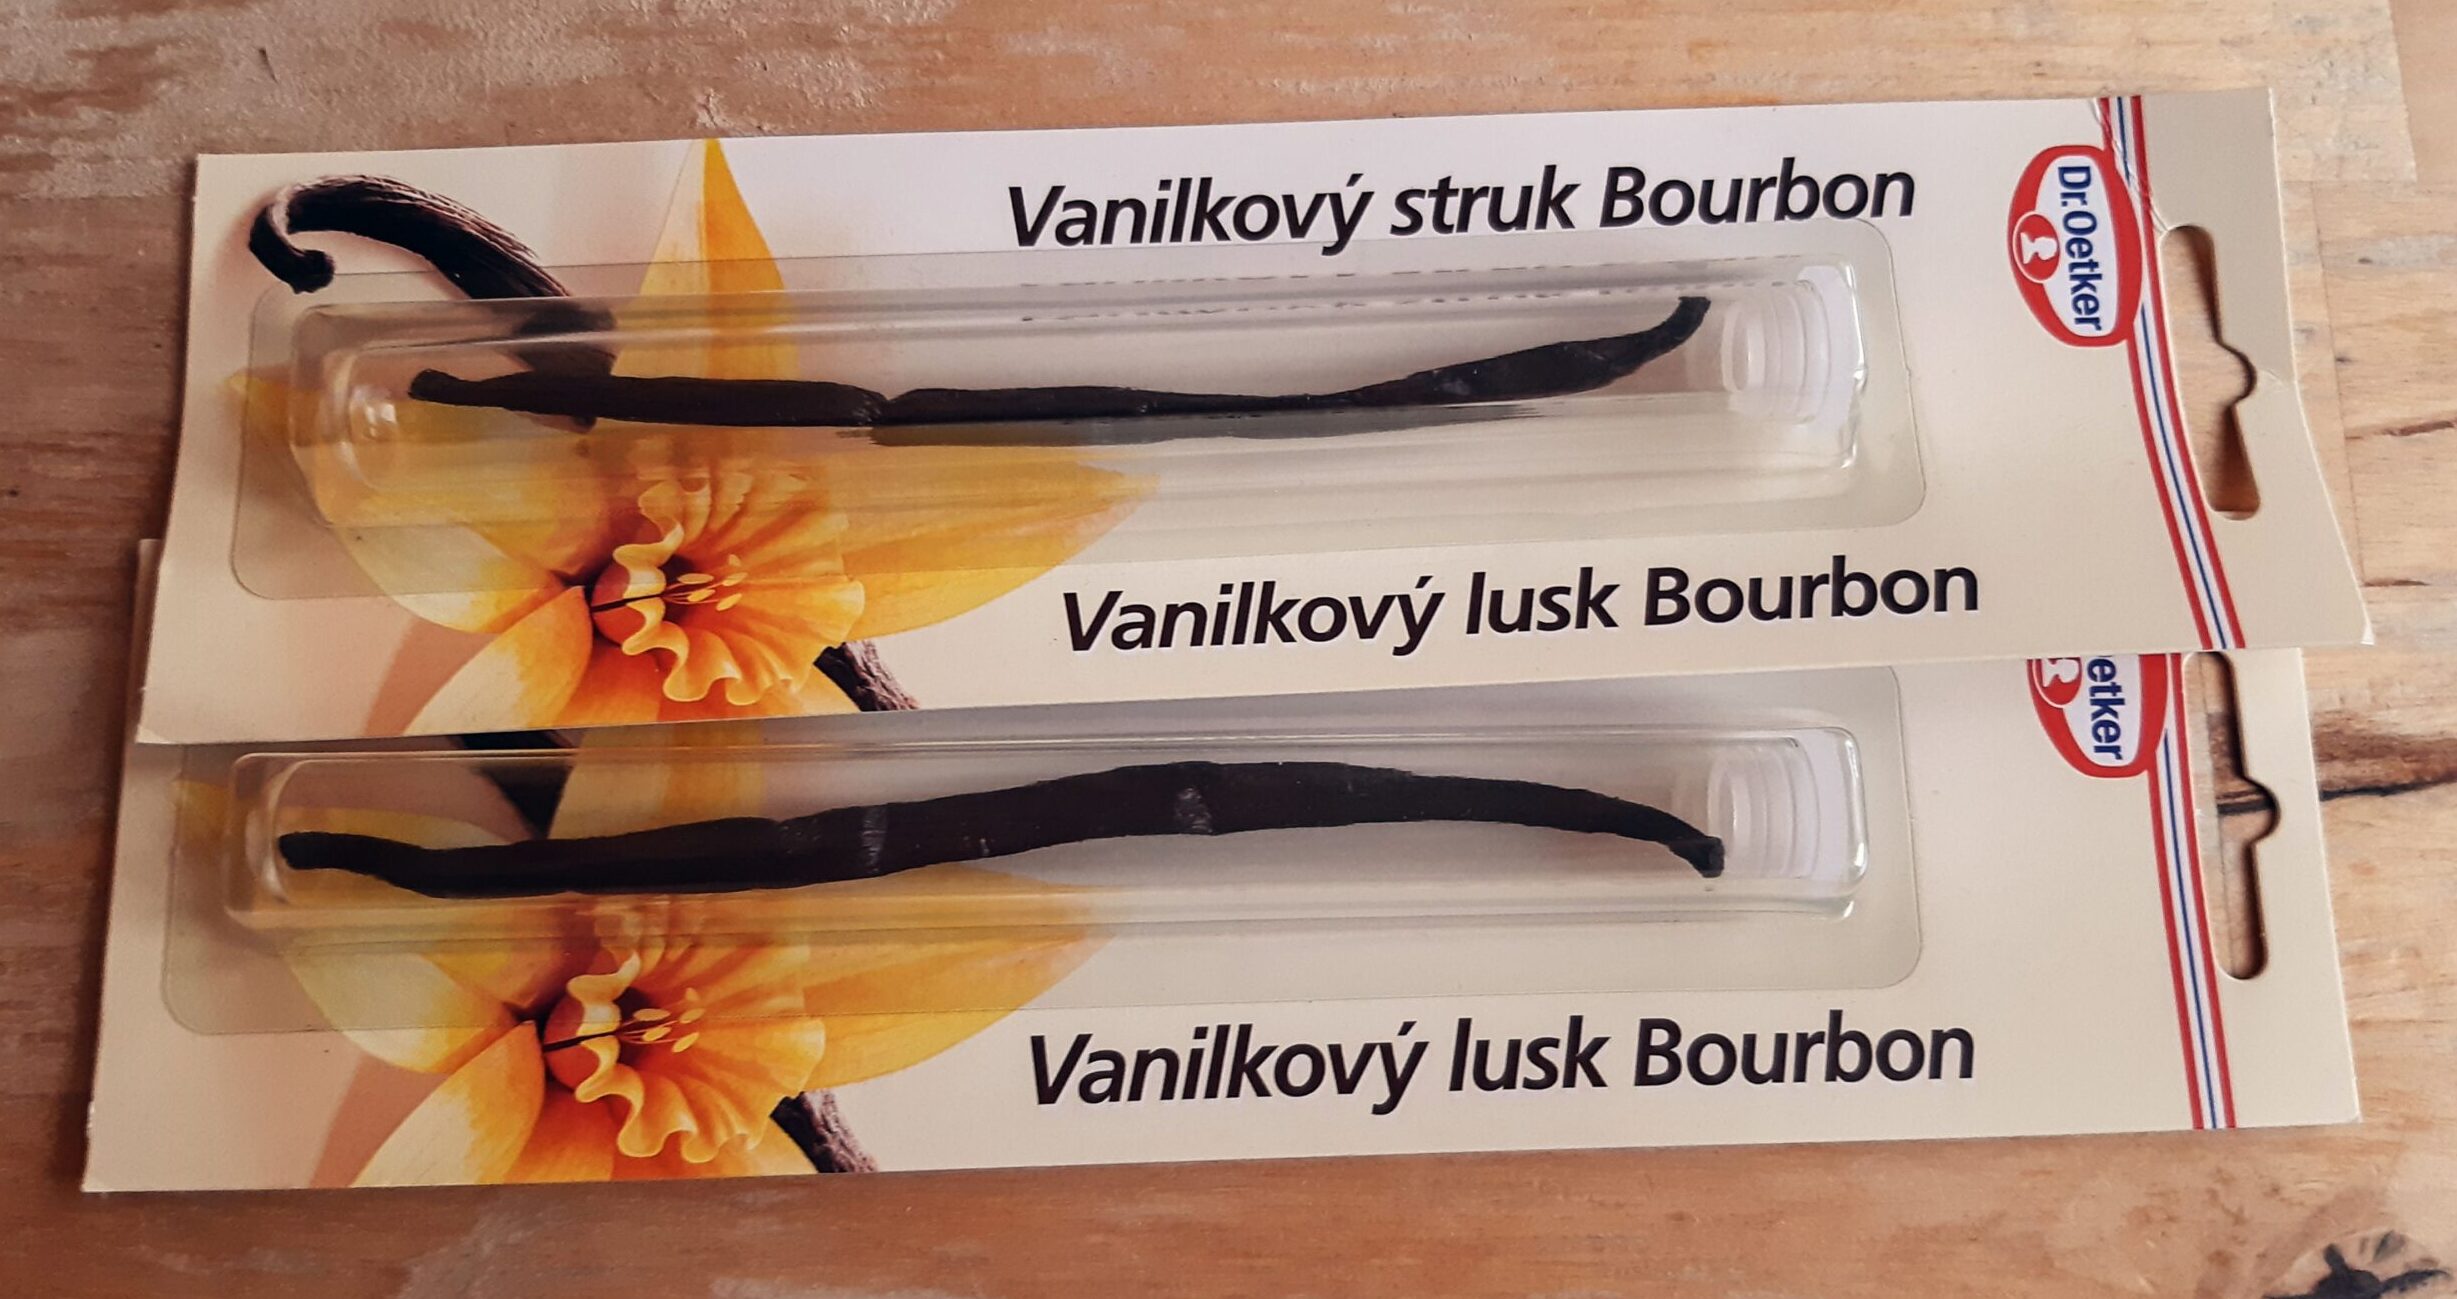 Vanilka Bourbon